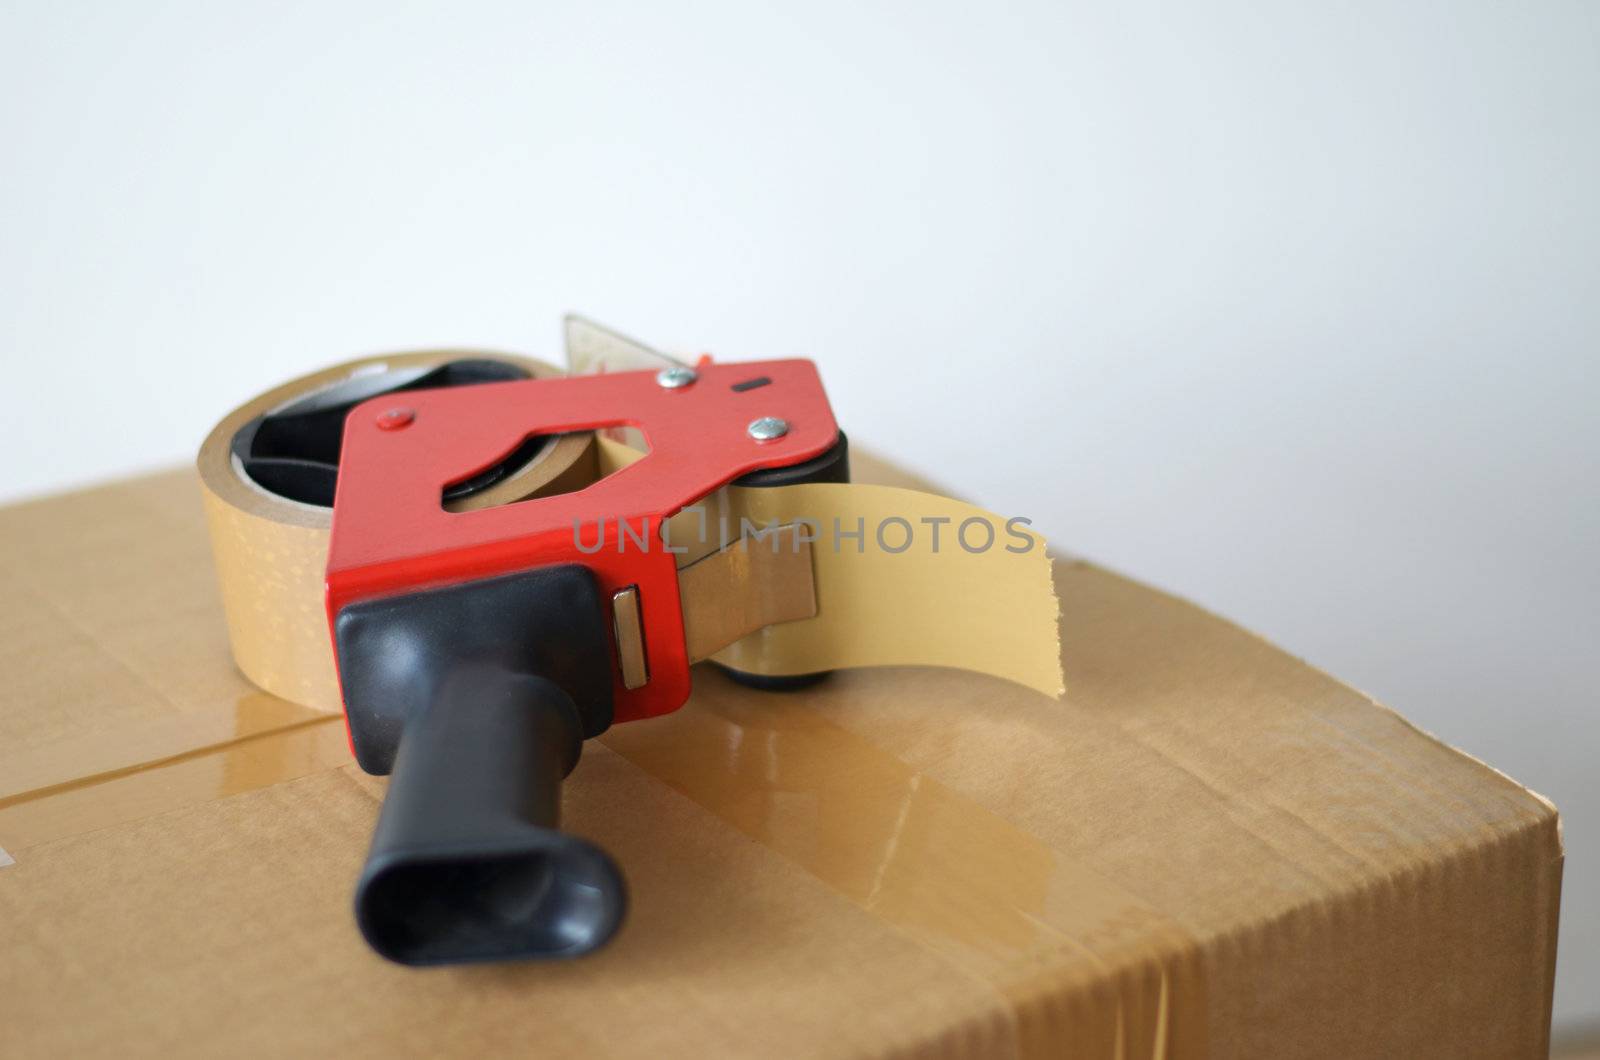 Cardboard box and tape dispenser by artofphoto